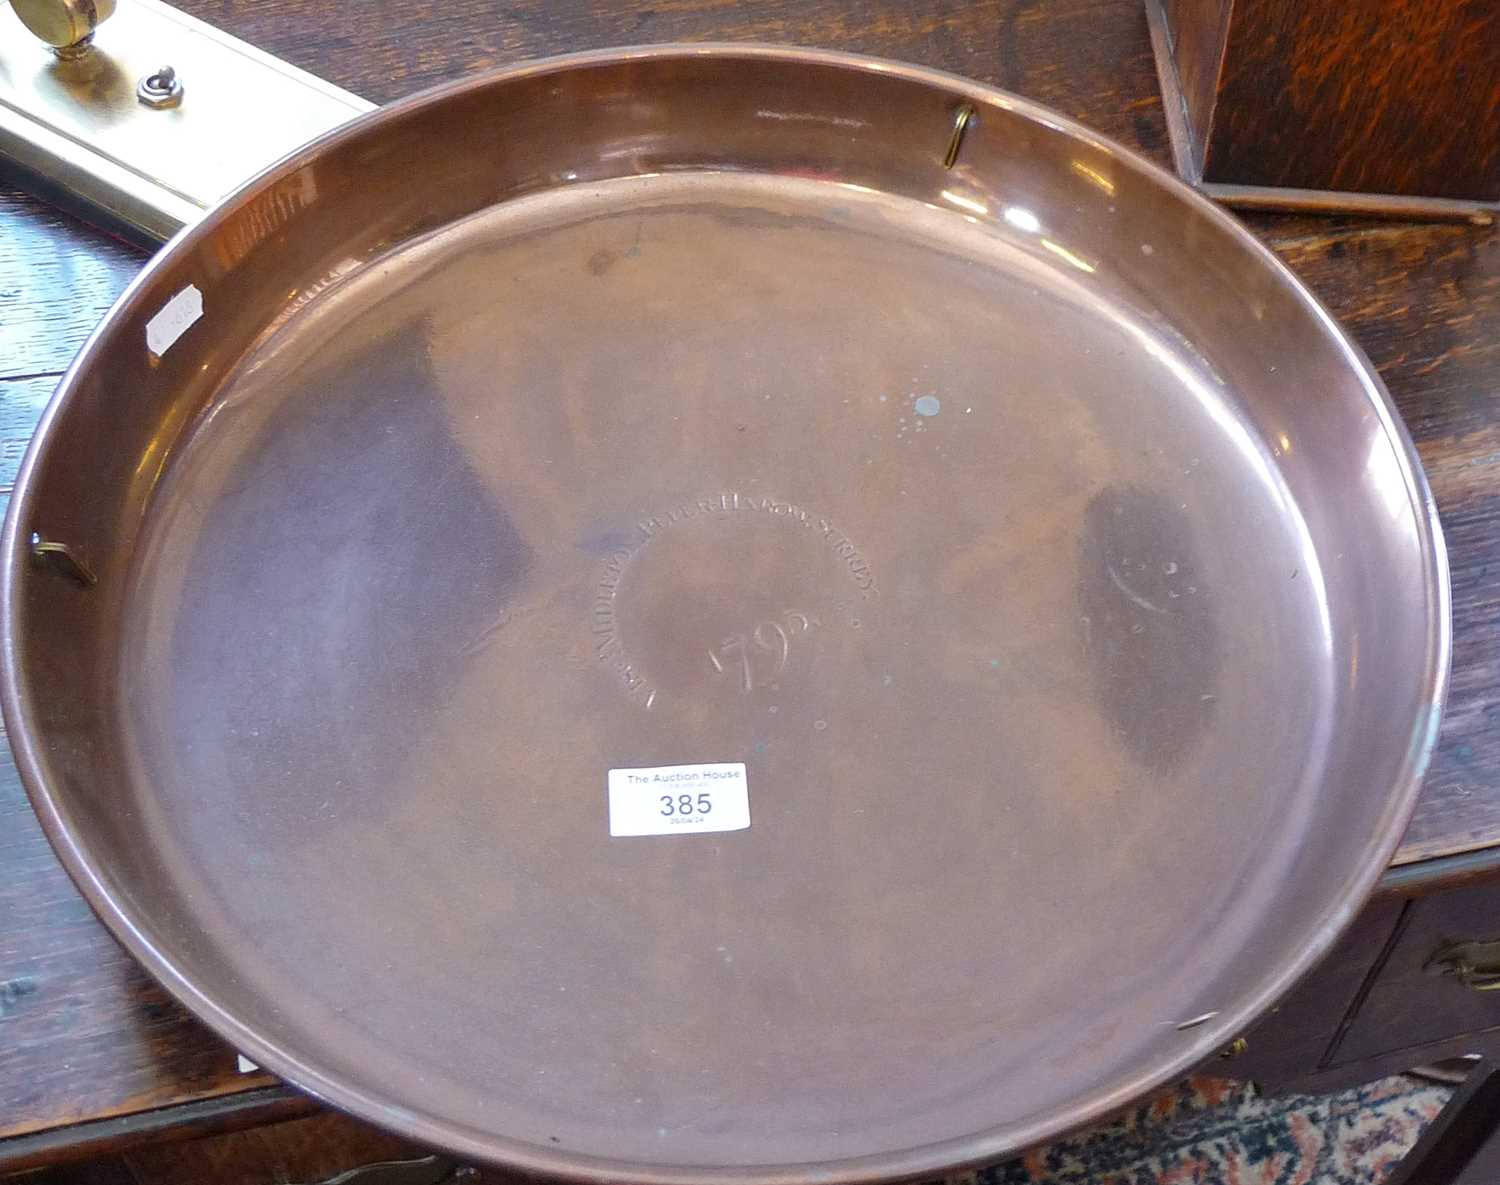 18th c. dated copper pan inscribed "Viscount Midleton, Peper-Harow, Surrey, 1795", 40cm diameter